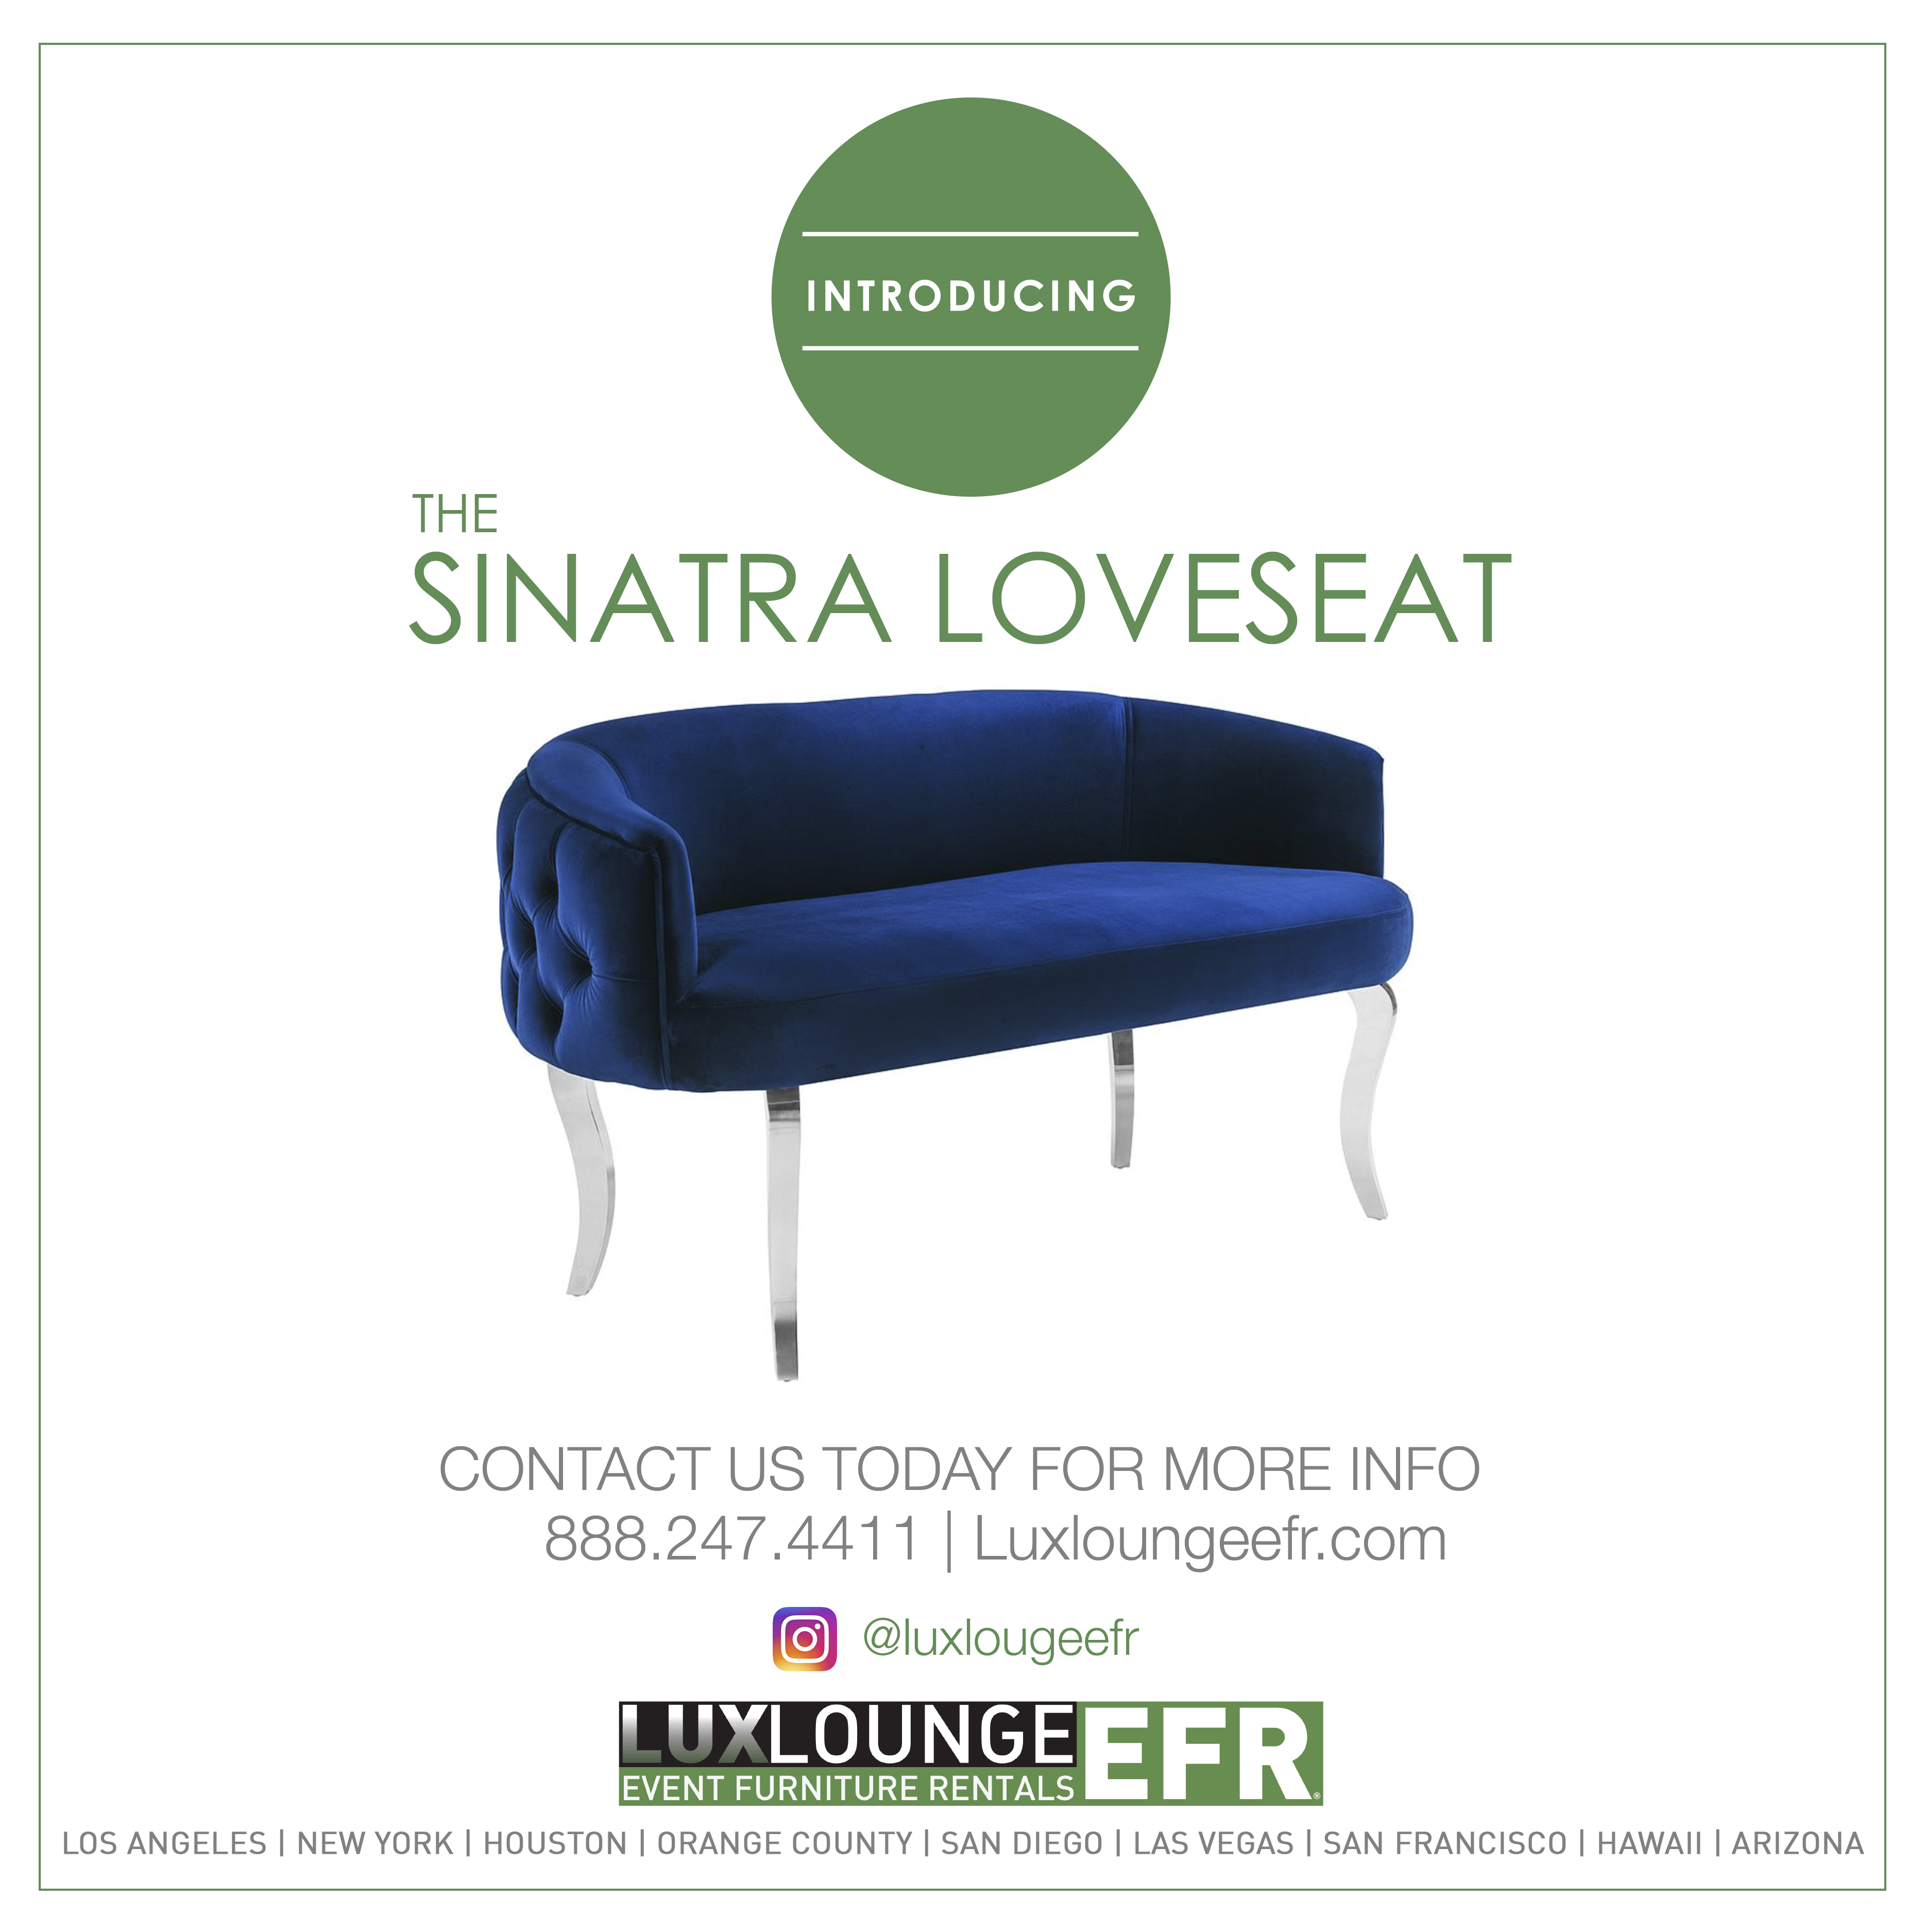 Event Furniture Rental Orange County Lux Lounge Efr 888 247 4411